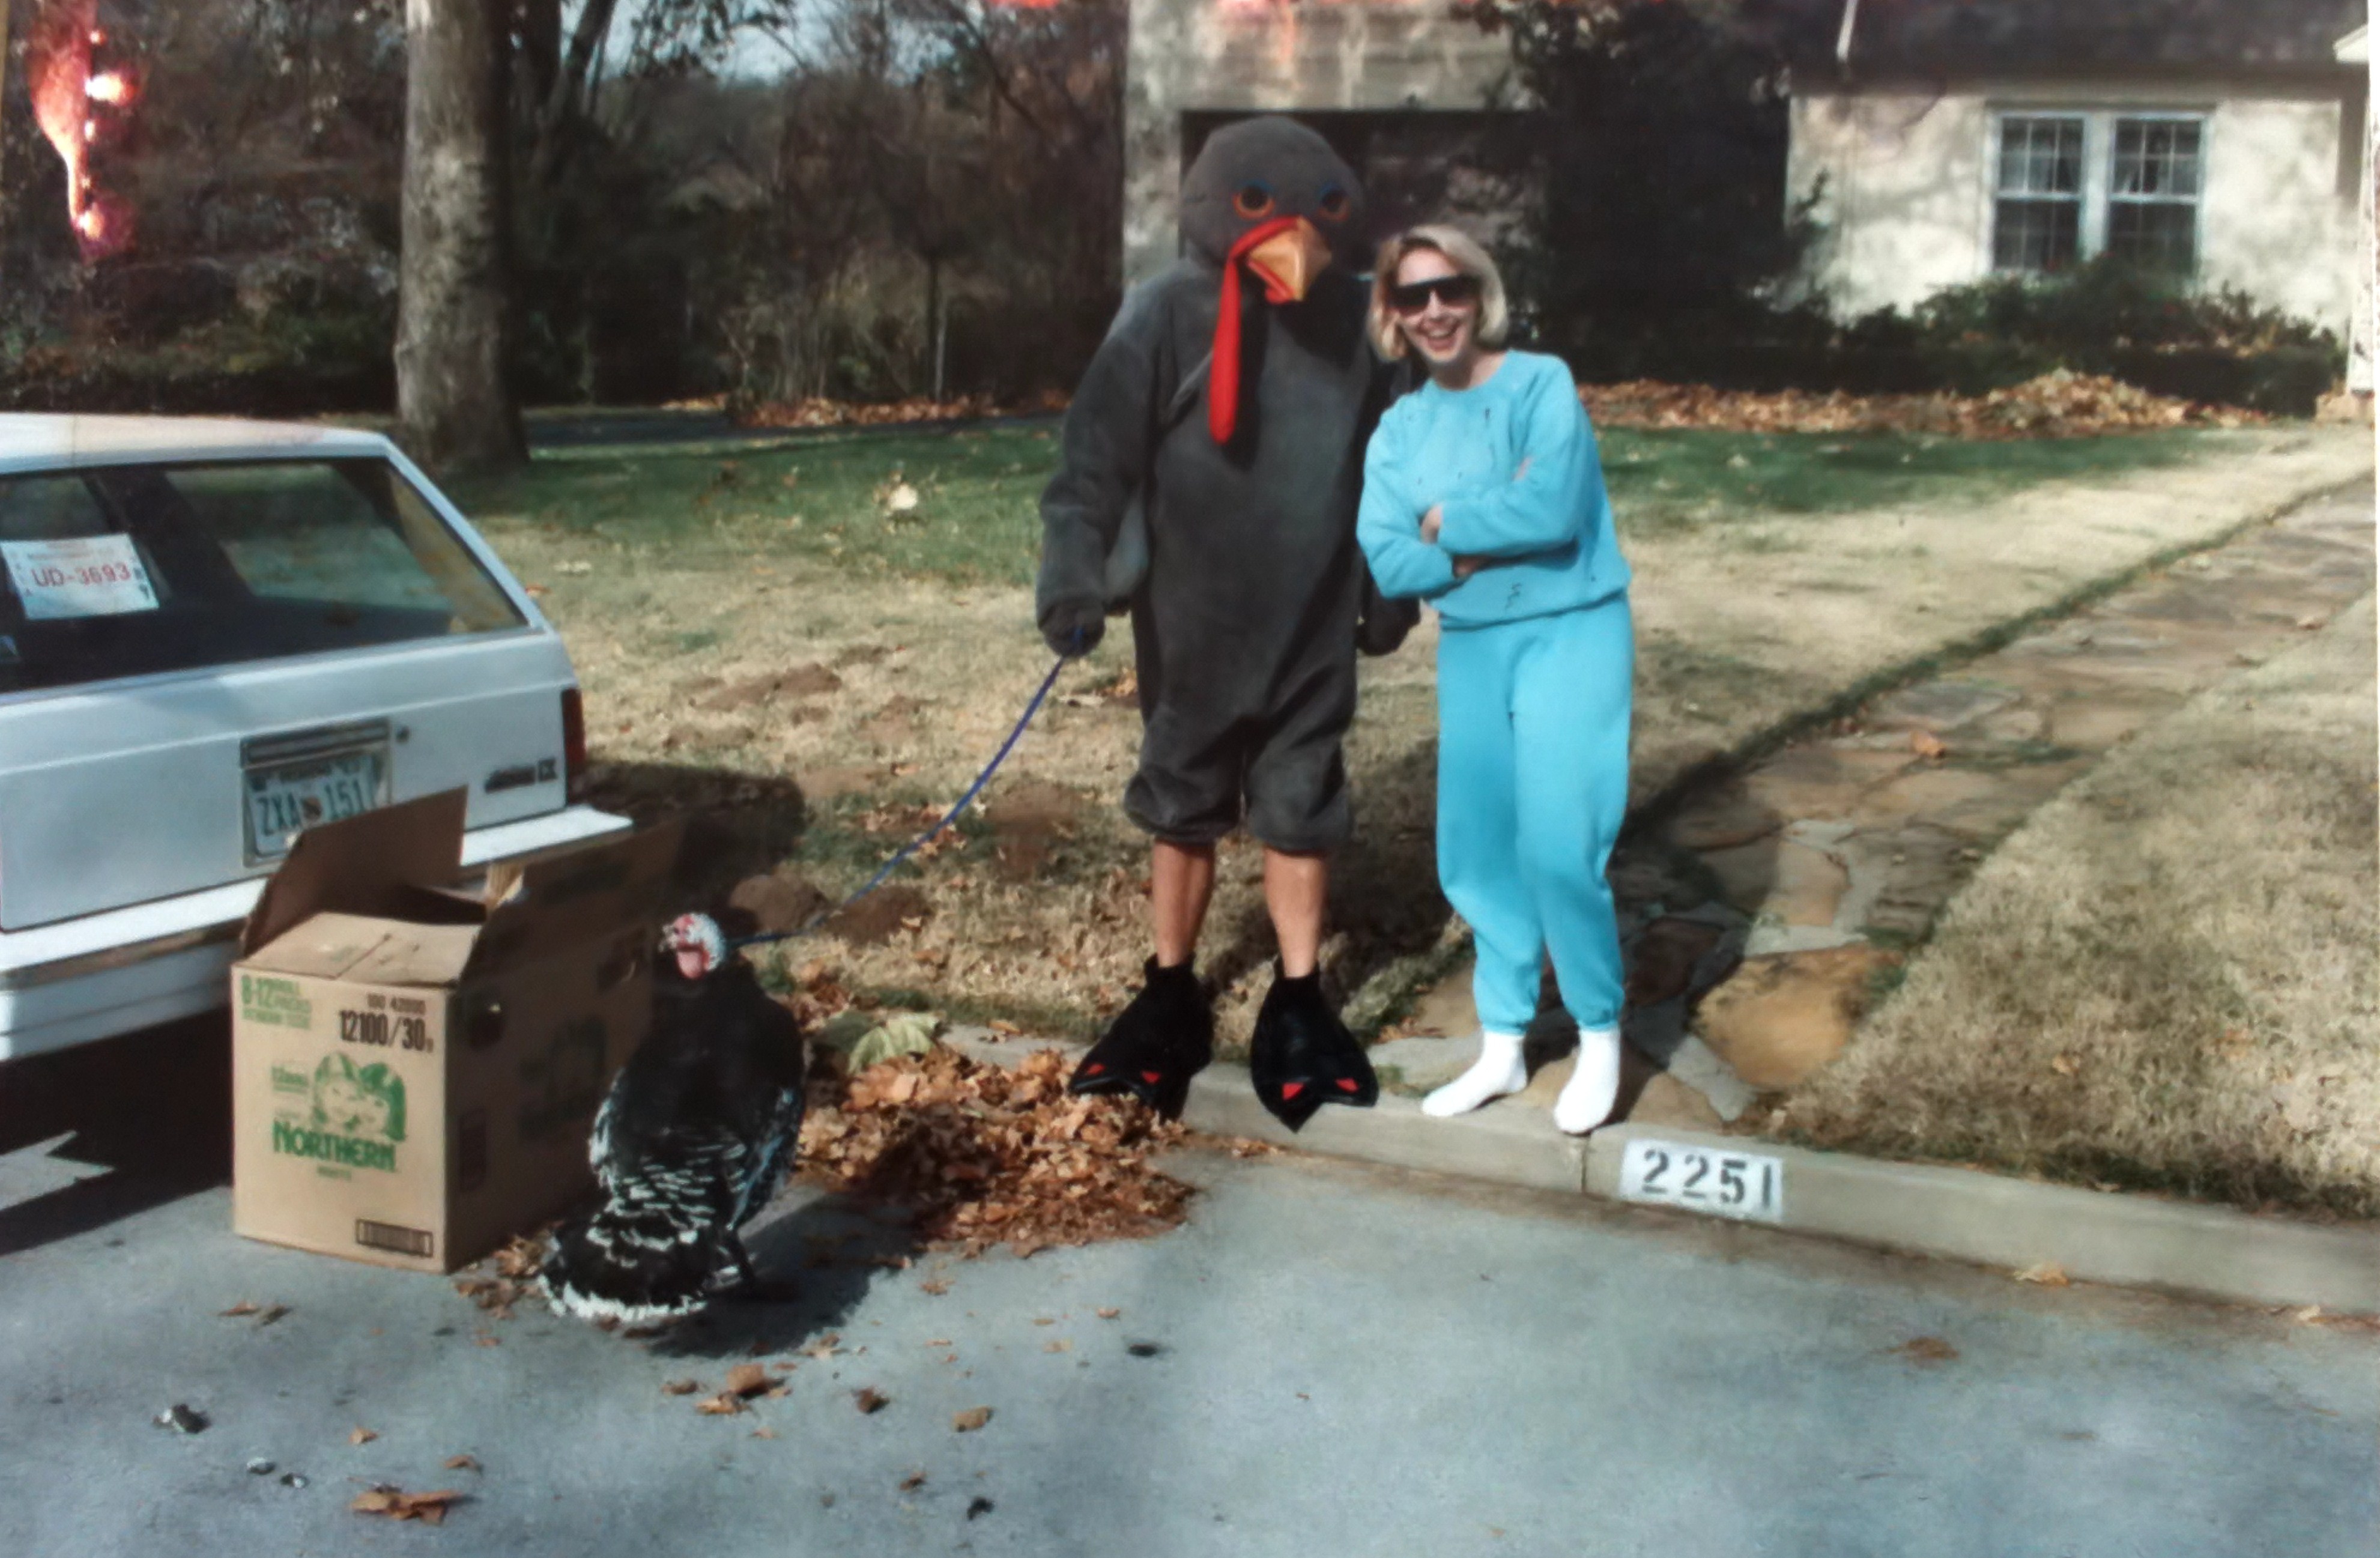 Left to right: A turkey, Rabon Martin, and Sherry Silva. Courtesy Pete Silva.